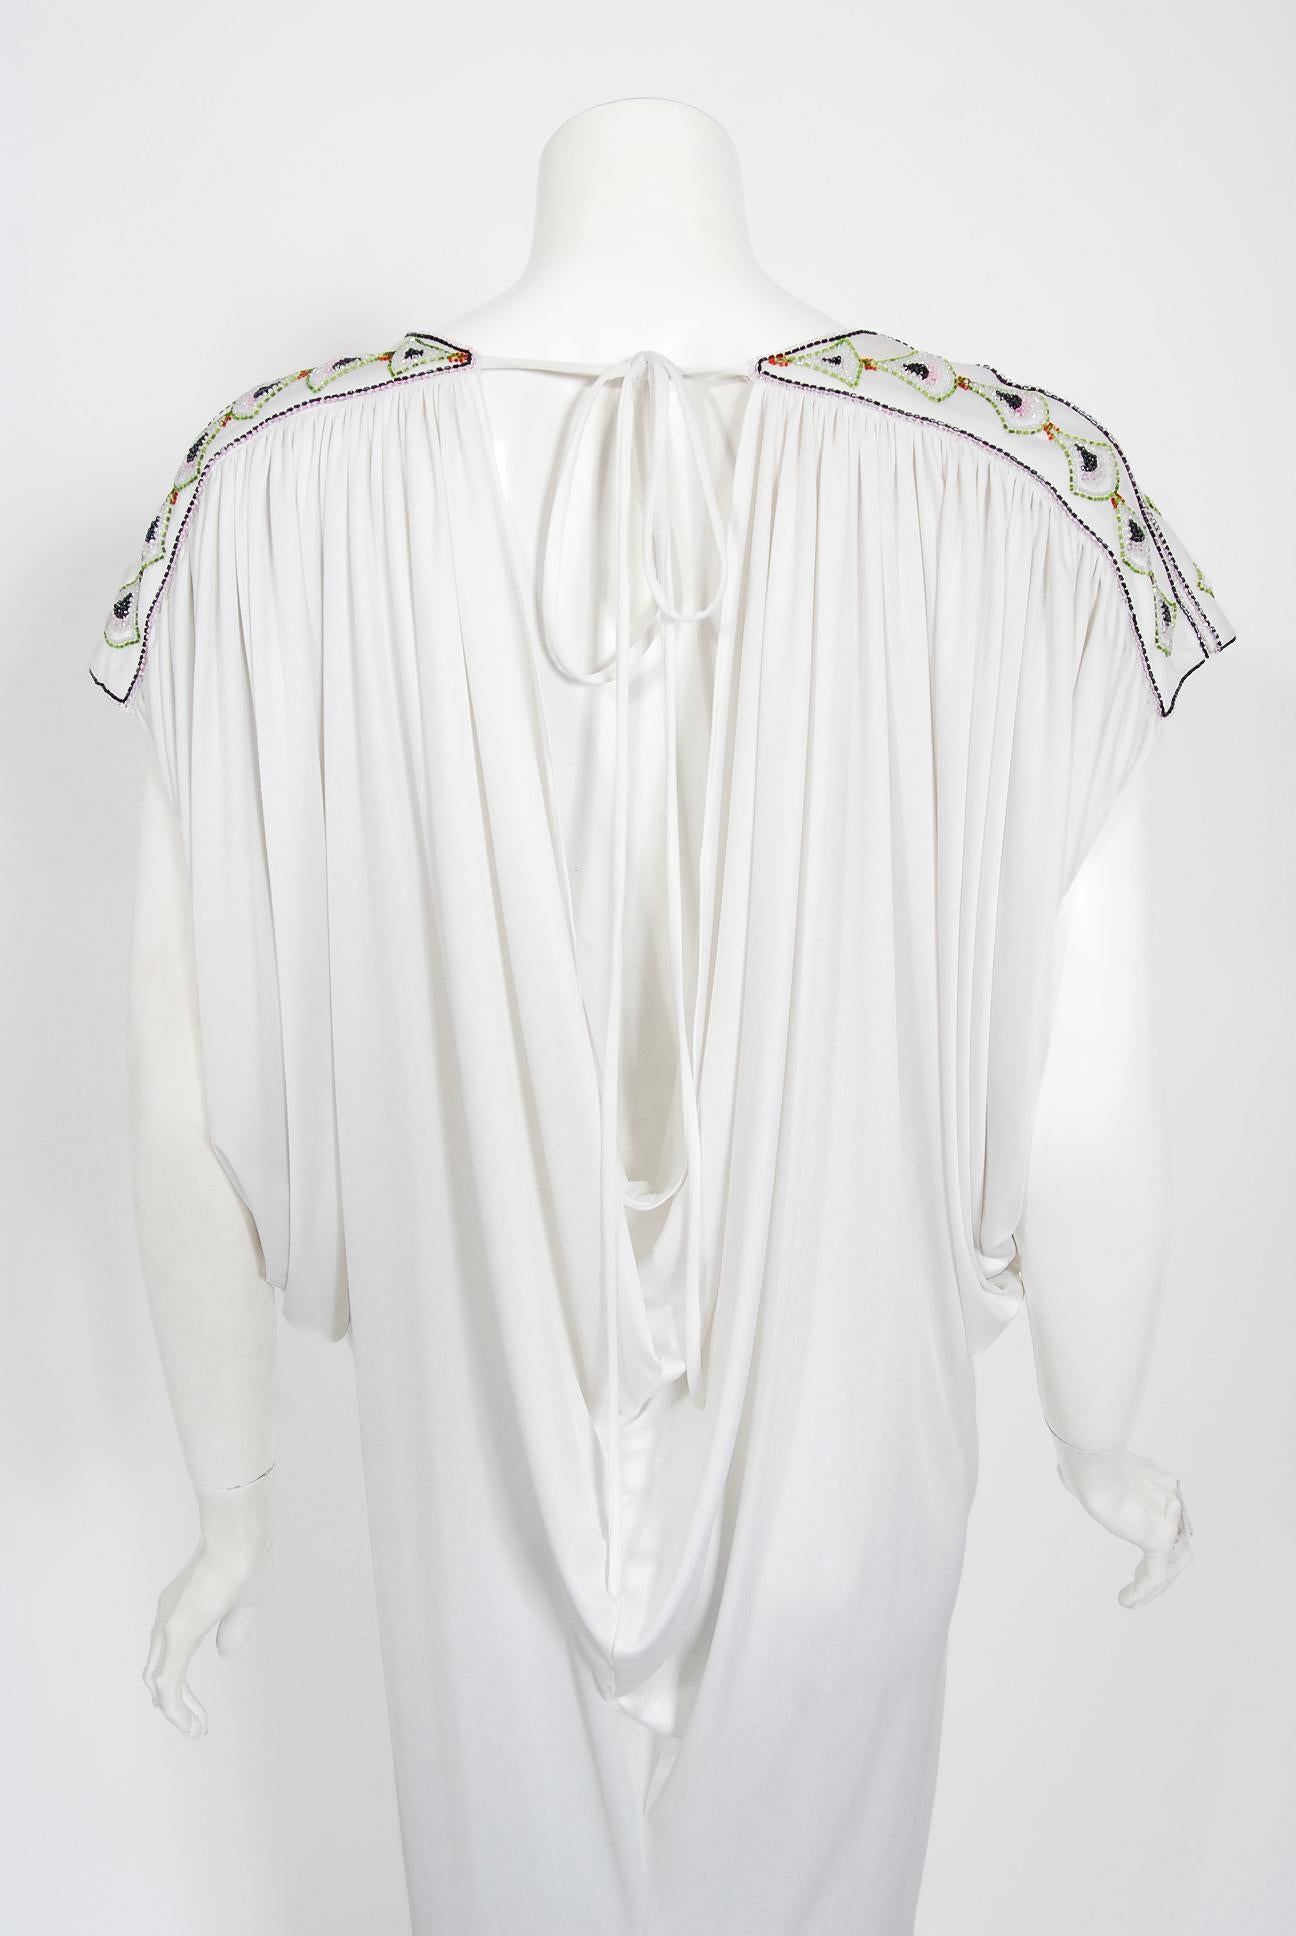 Vintage 1975 Bill Gibb Documented Beaded White Jersey Draped Goddess Caftan Gown 10